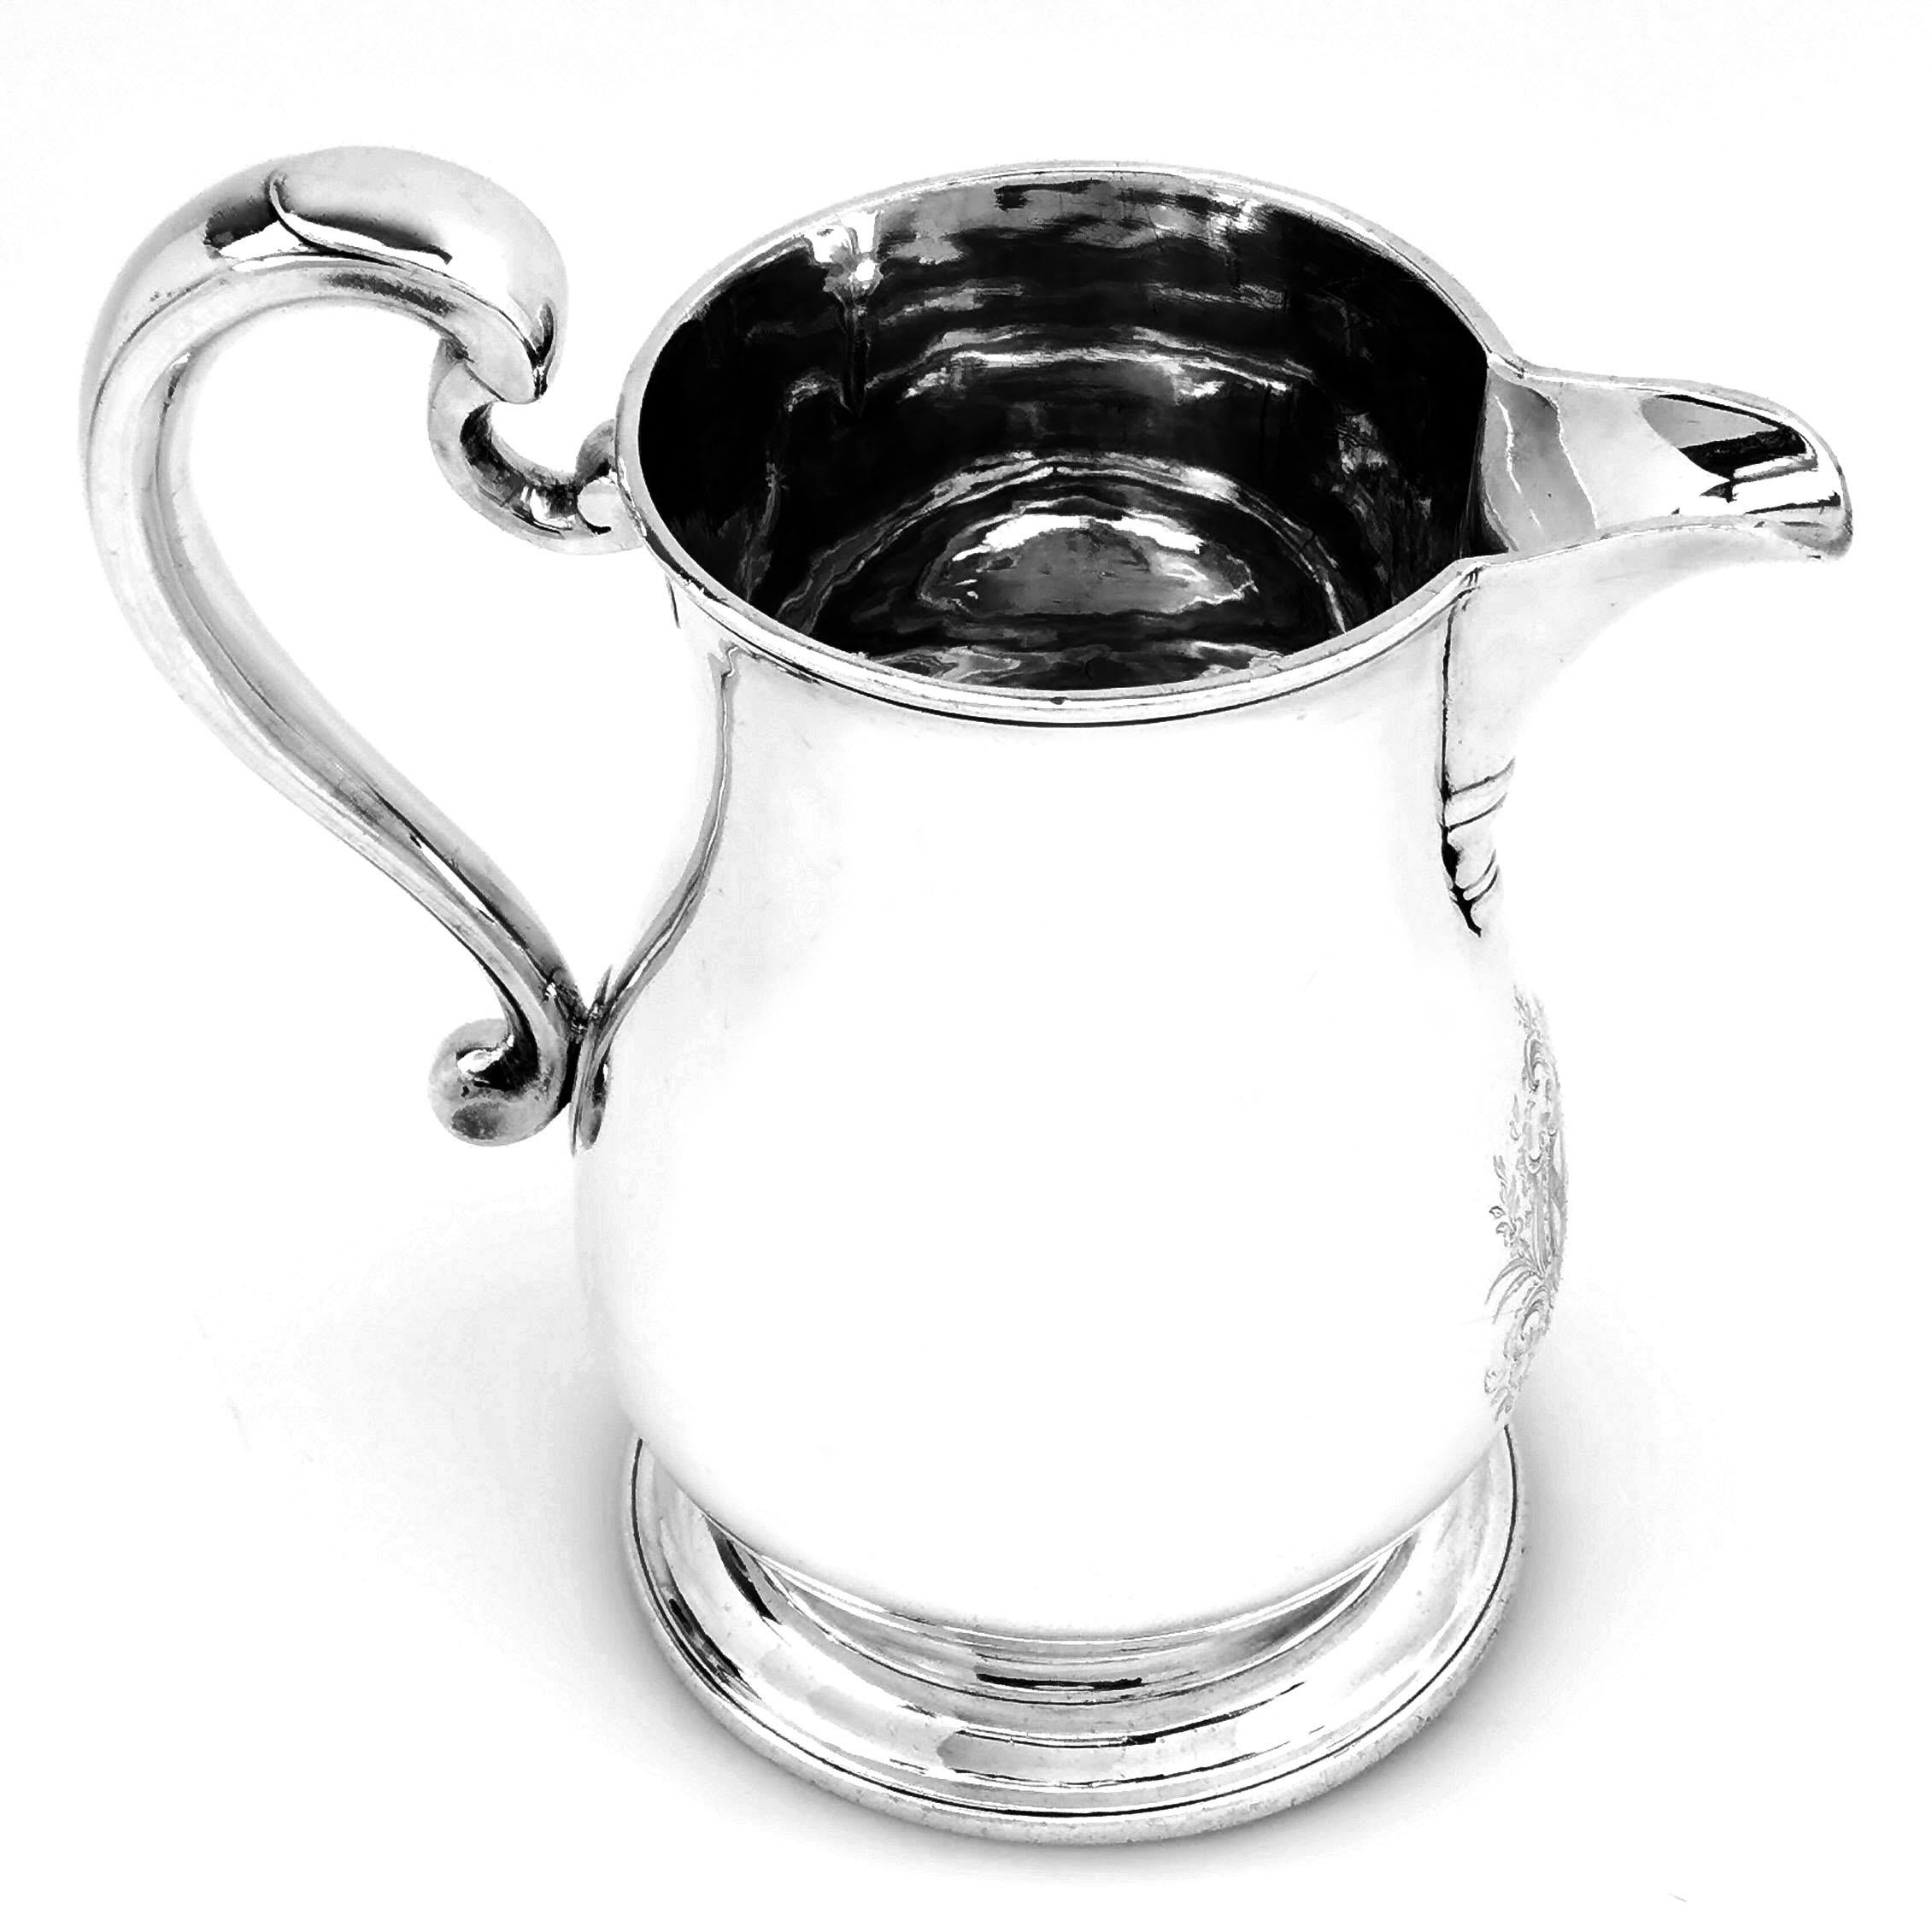 English Antique George II Sterling Silver Jug / Ewer / Pitcher 1752 Beer / Water